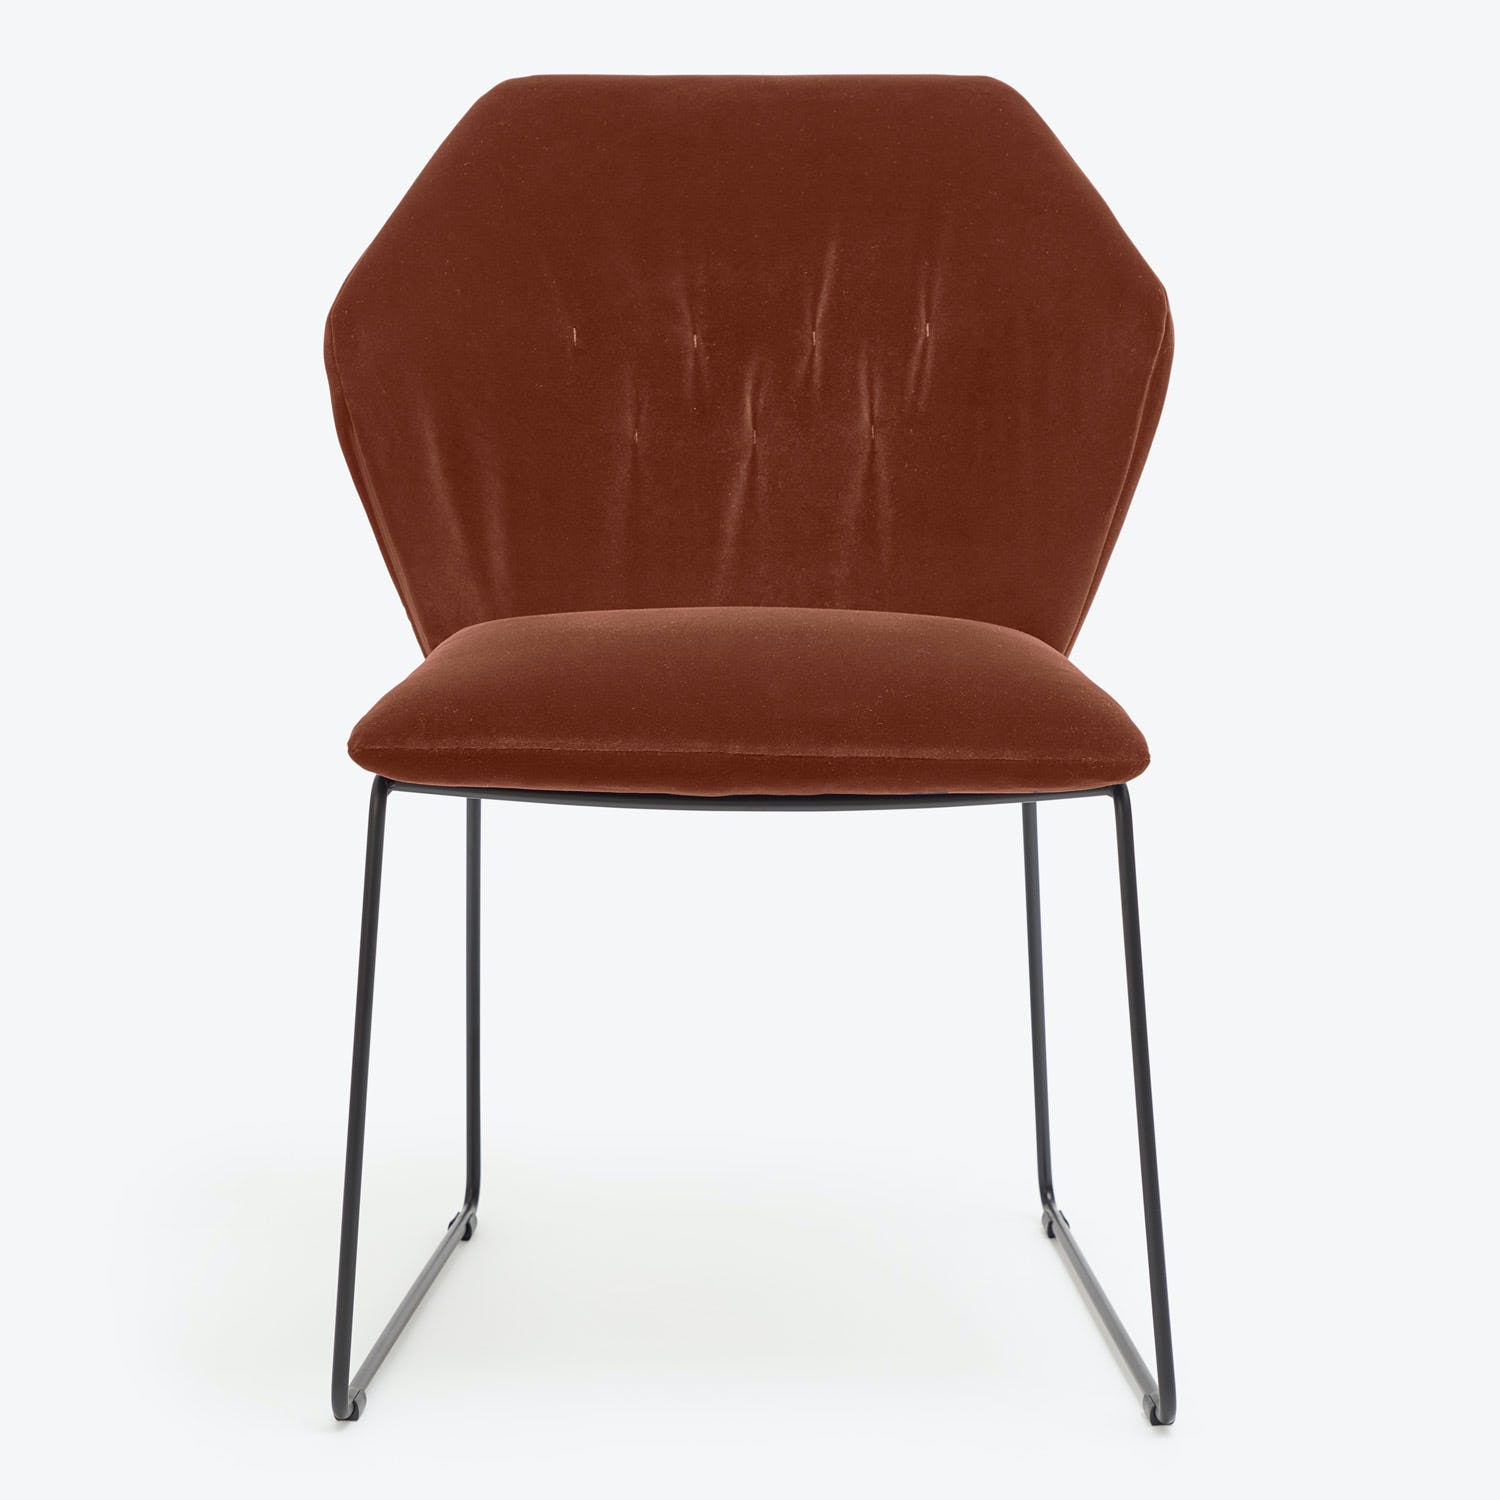 Minimalist modern chair with velvet upholstery and sleek metal legs.